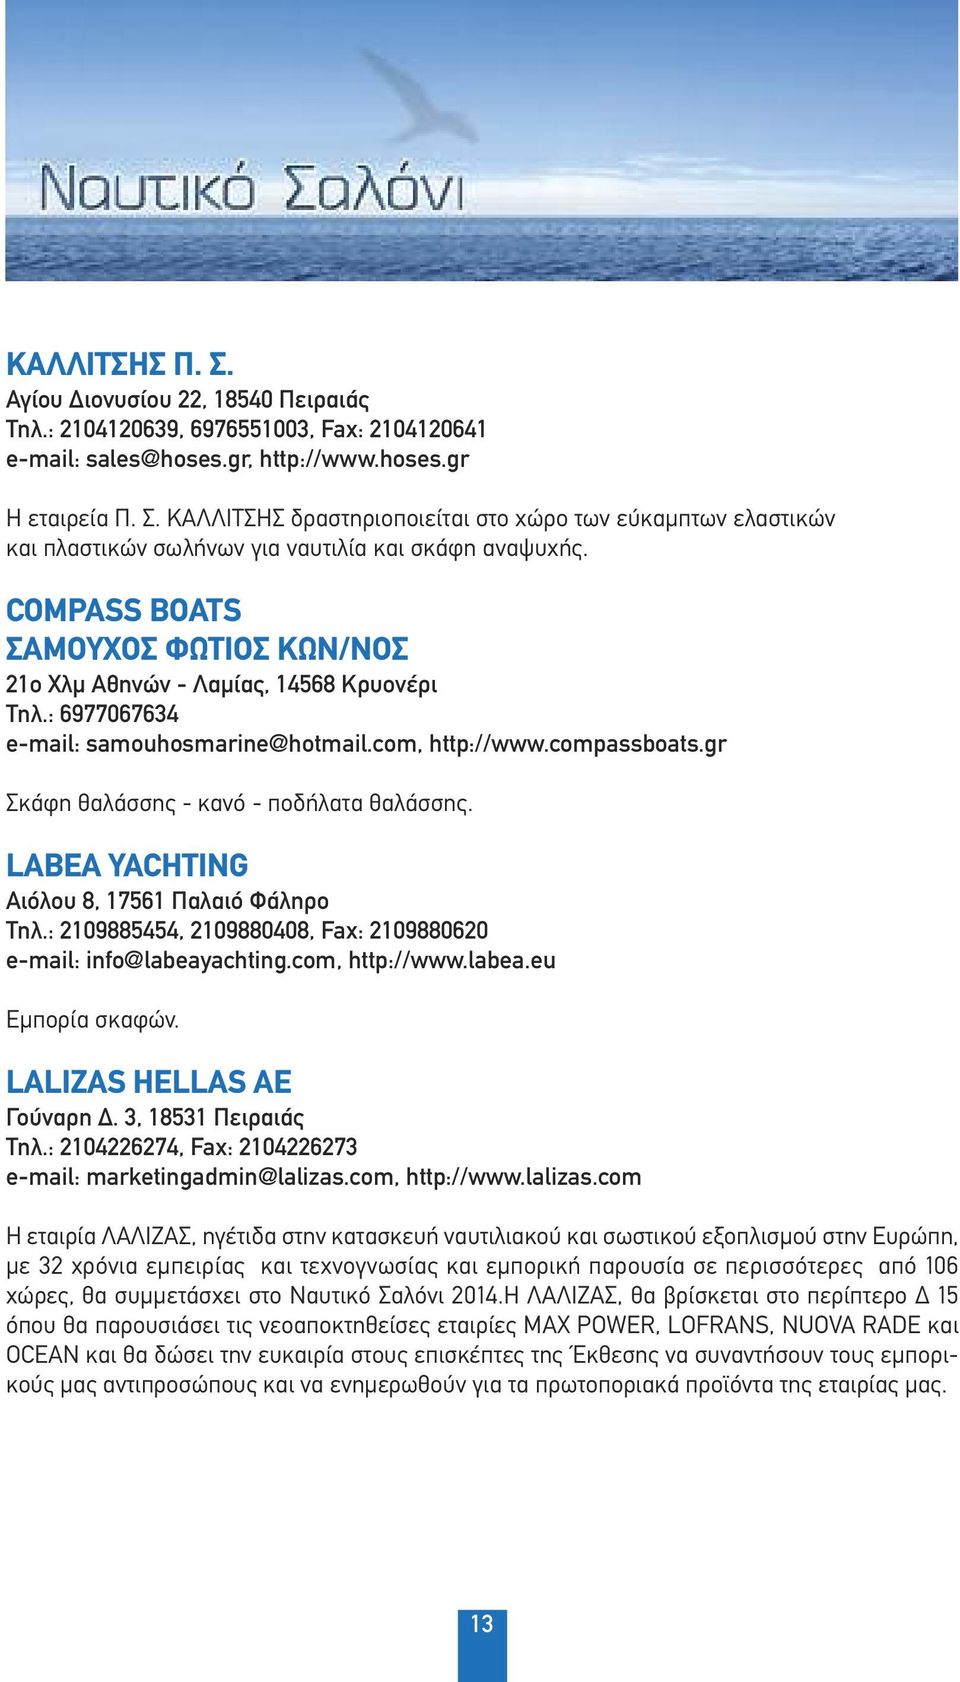 LABEA YACHTING Αιόλου 8, 17561 Παλαιό Φάληρο Τηλ.: 2109885454, 2109880408, Fax: 2109880620 e-mail: info@labeayachting.com, http://www.labea.eu Εμπορία σκαφών. LALIZAS HELLAS ΑΕ Γούναρη Δ.